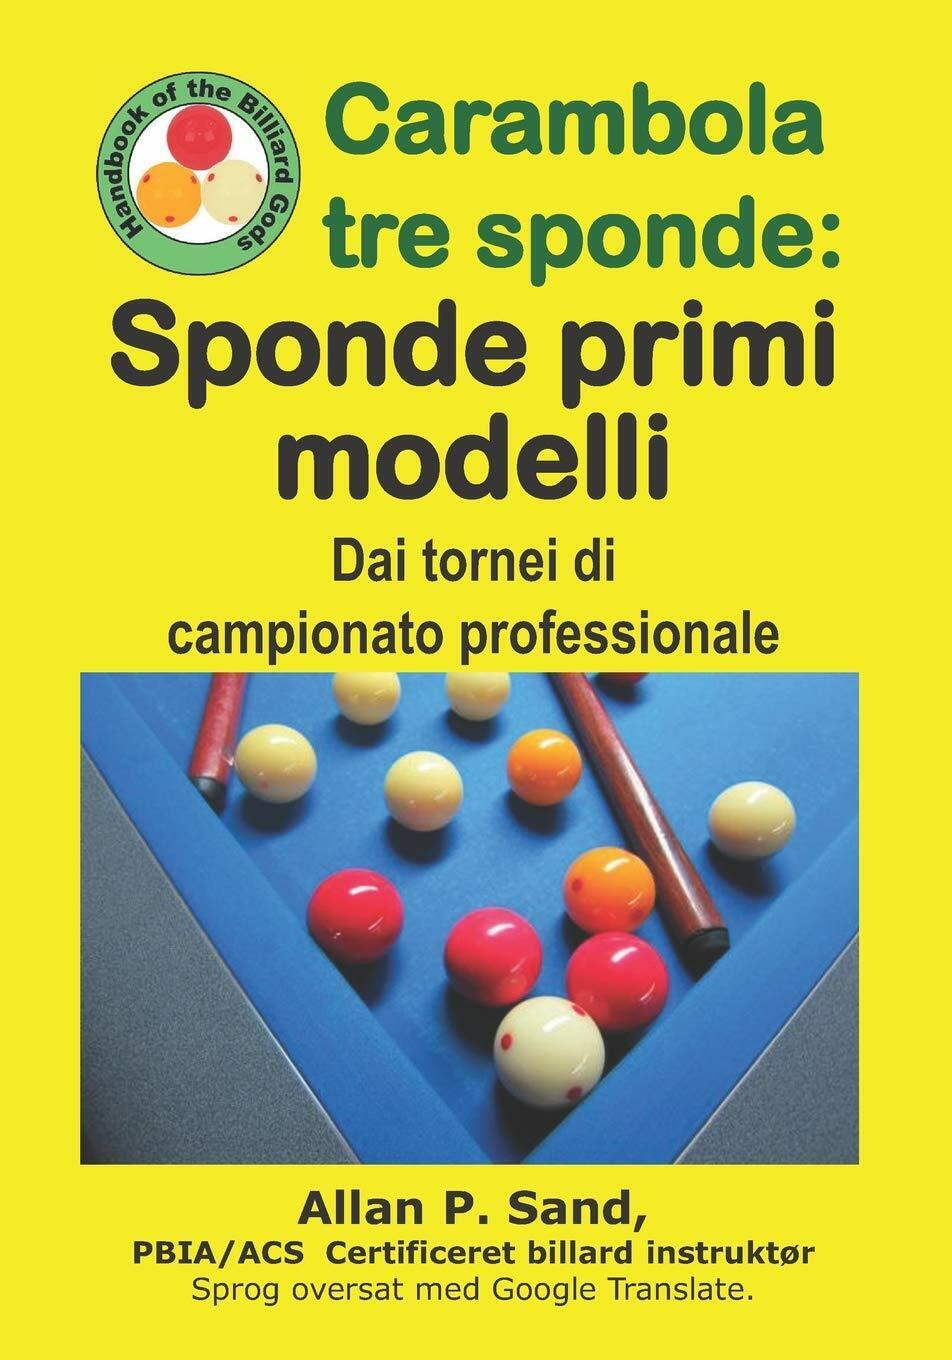 Carambola tre sponde - Sponde primi modelli - Allan P. Sand - 2019